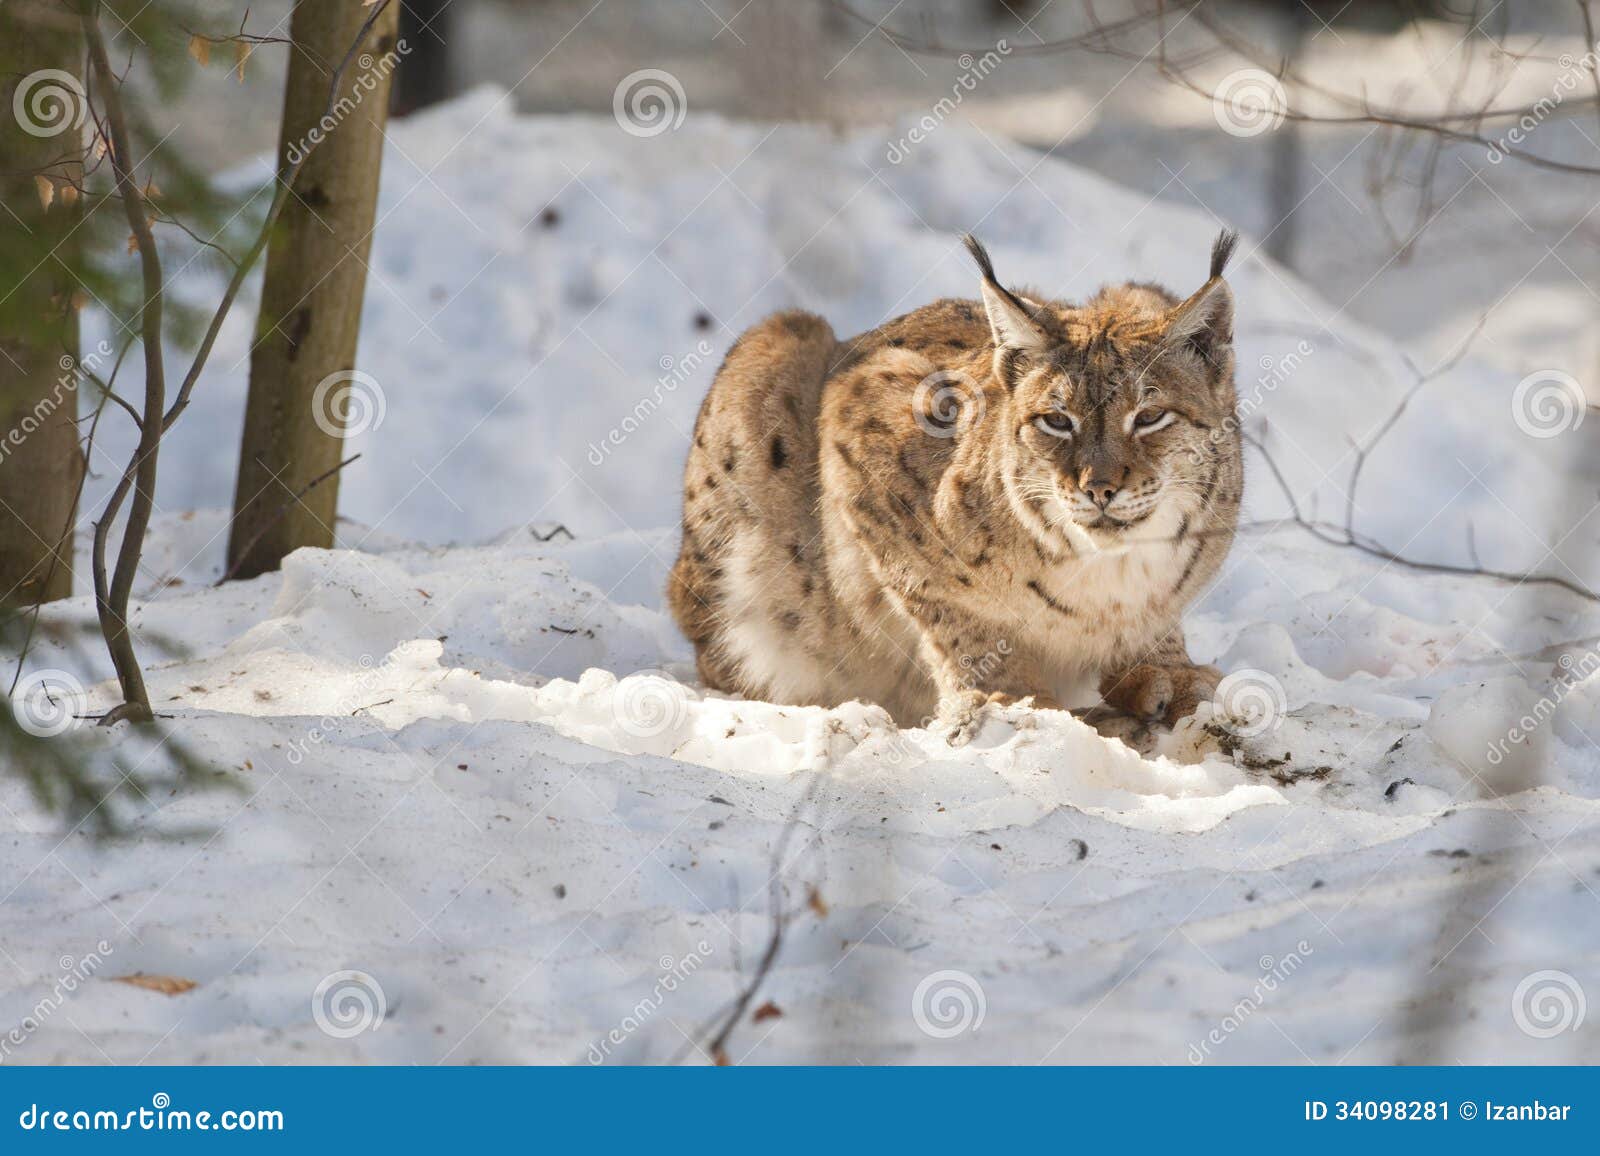 Lynx in the snow stock image. Image of predator, portrait - 34098281